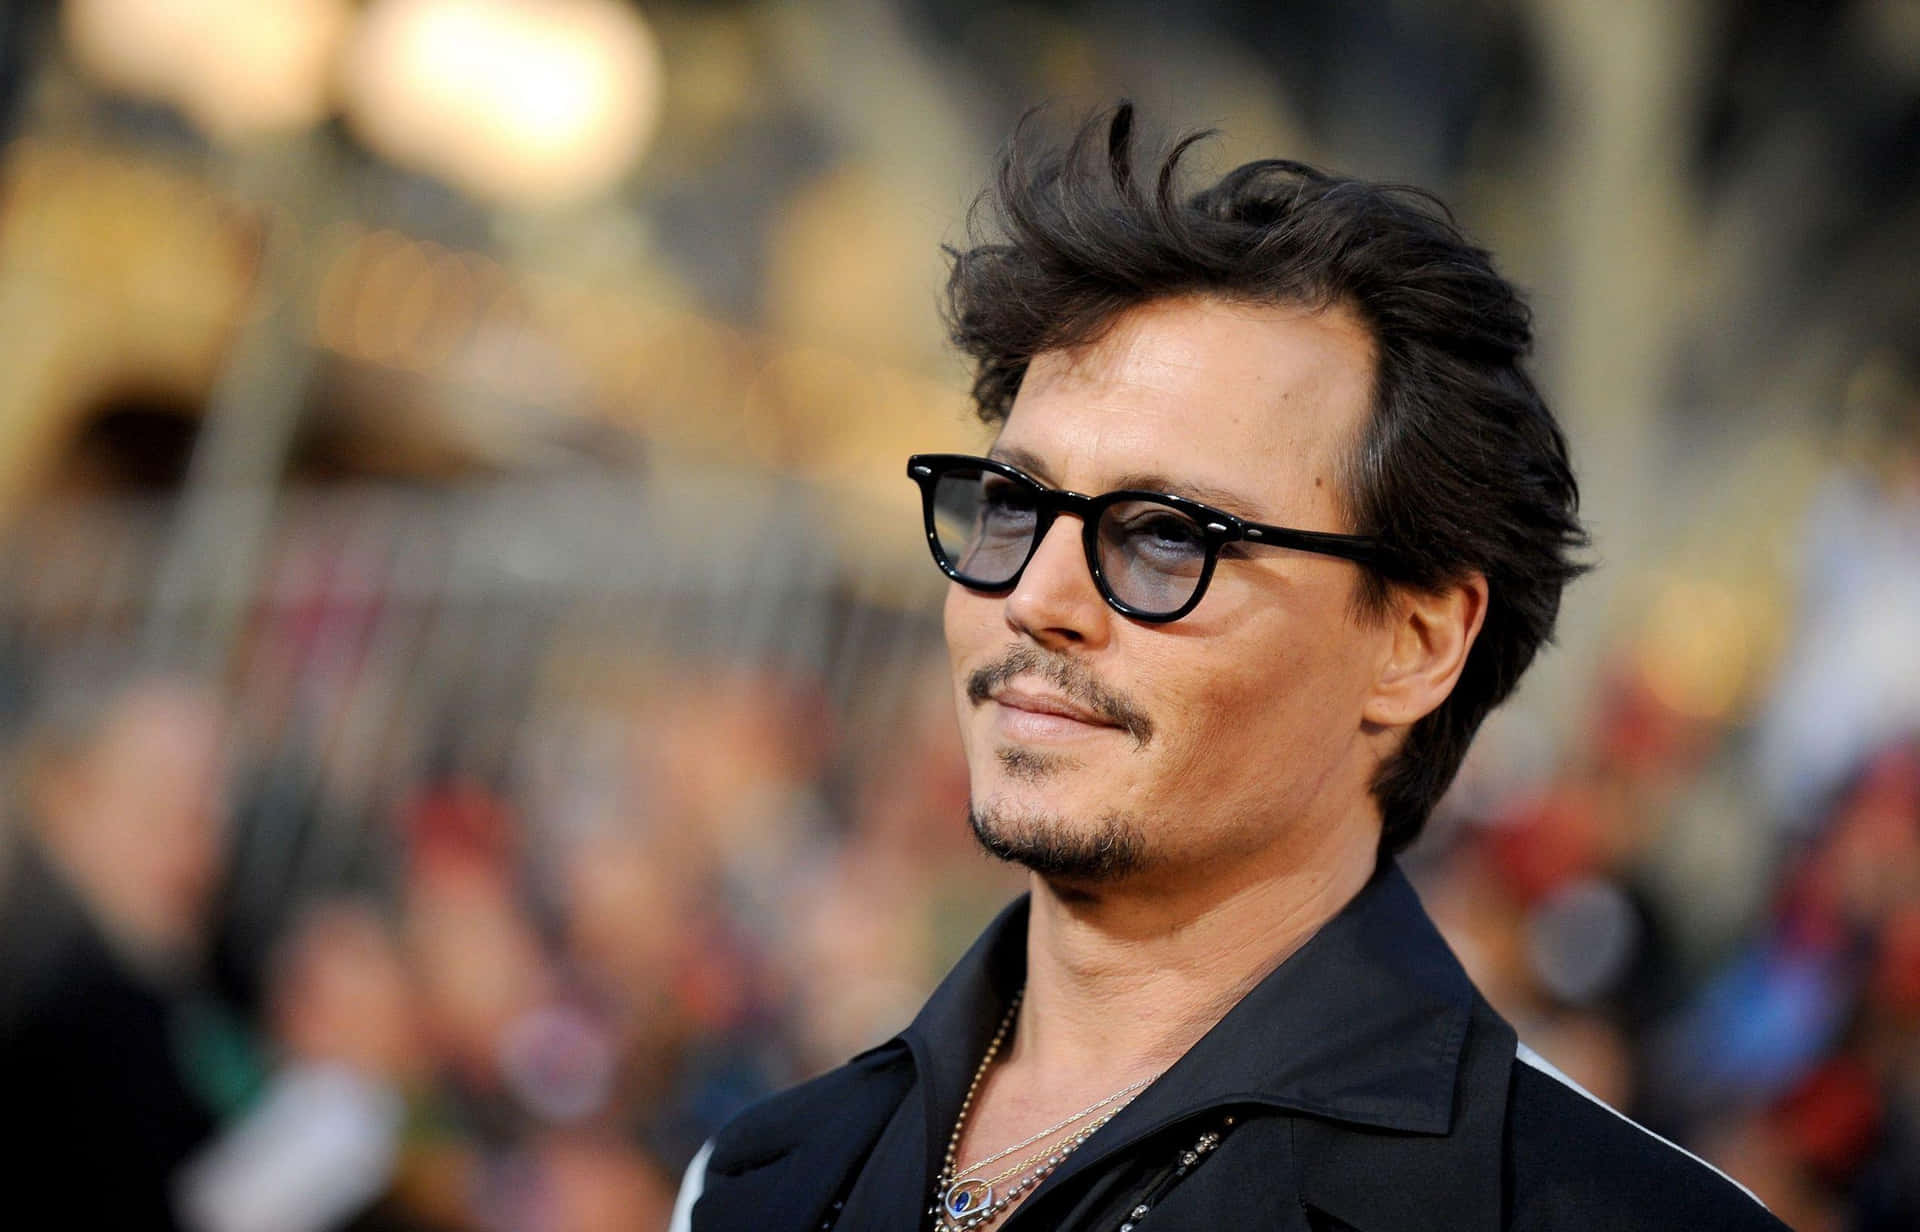 Johnny Depp at the 2017 Golden Globe Awards